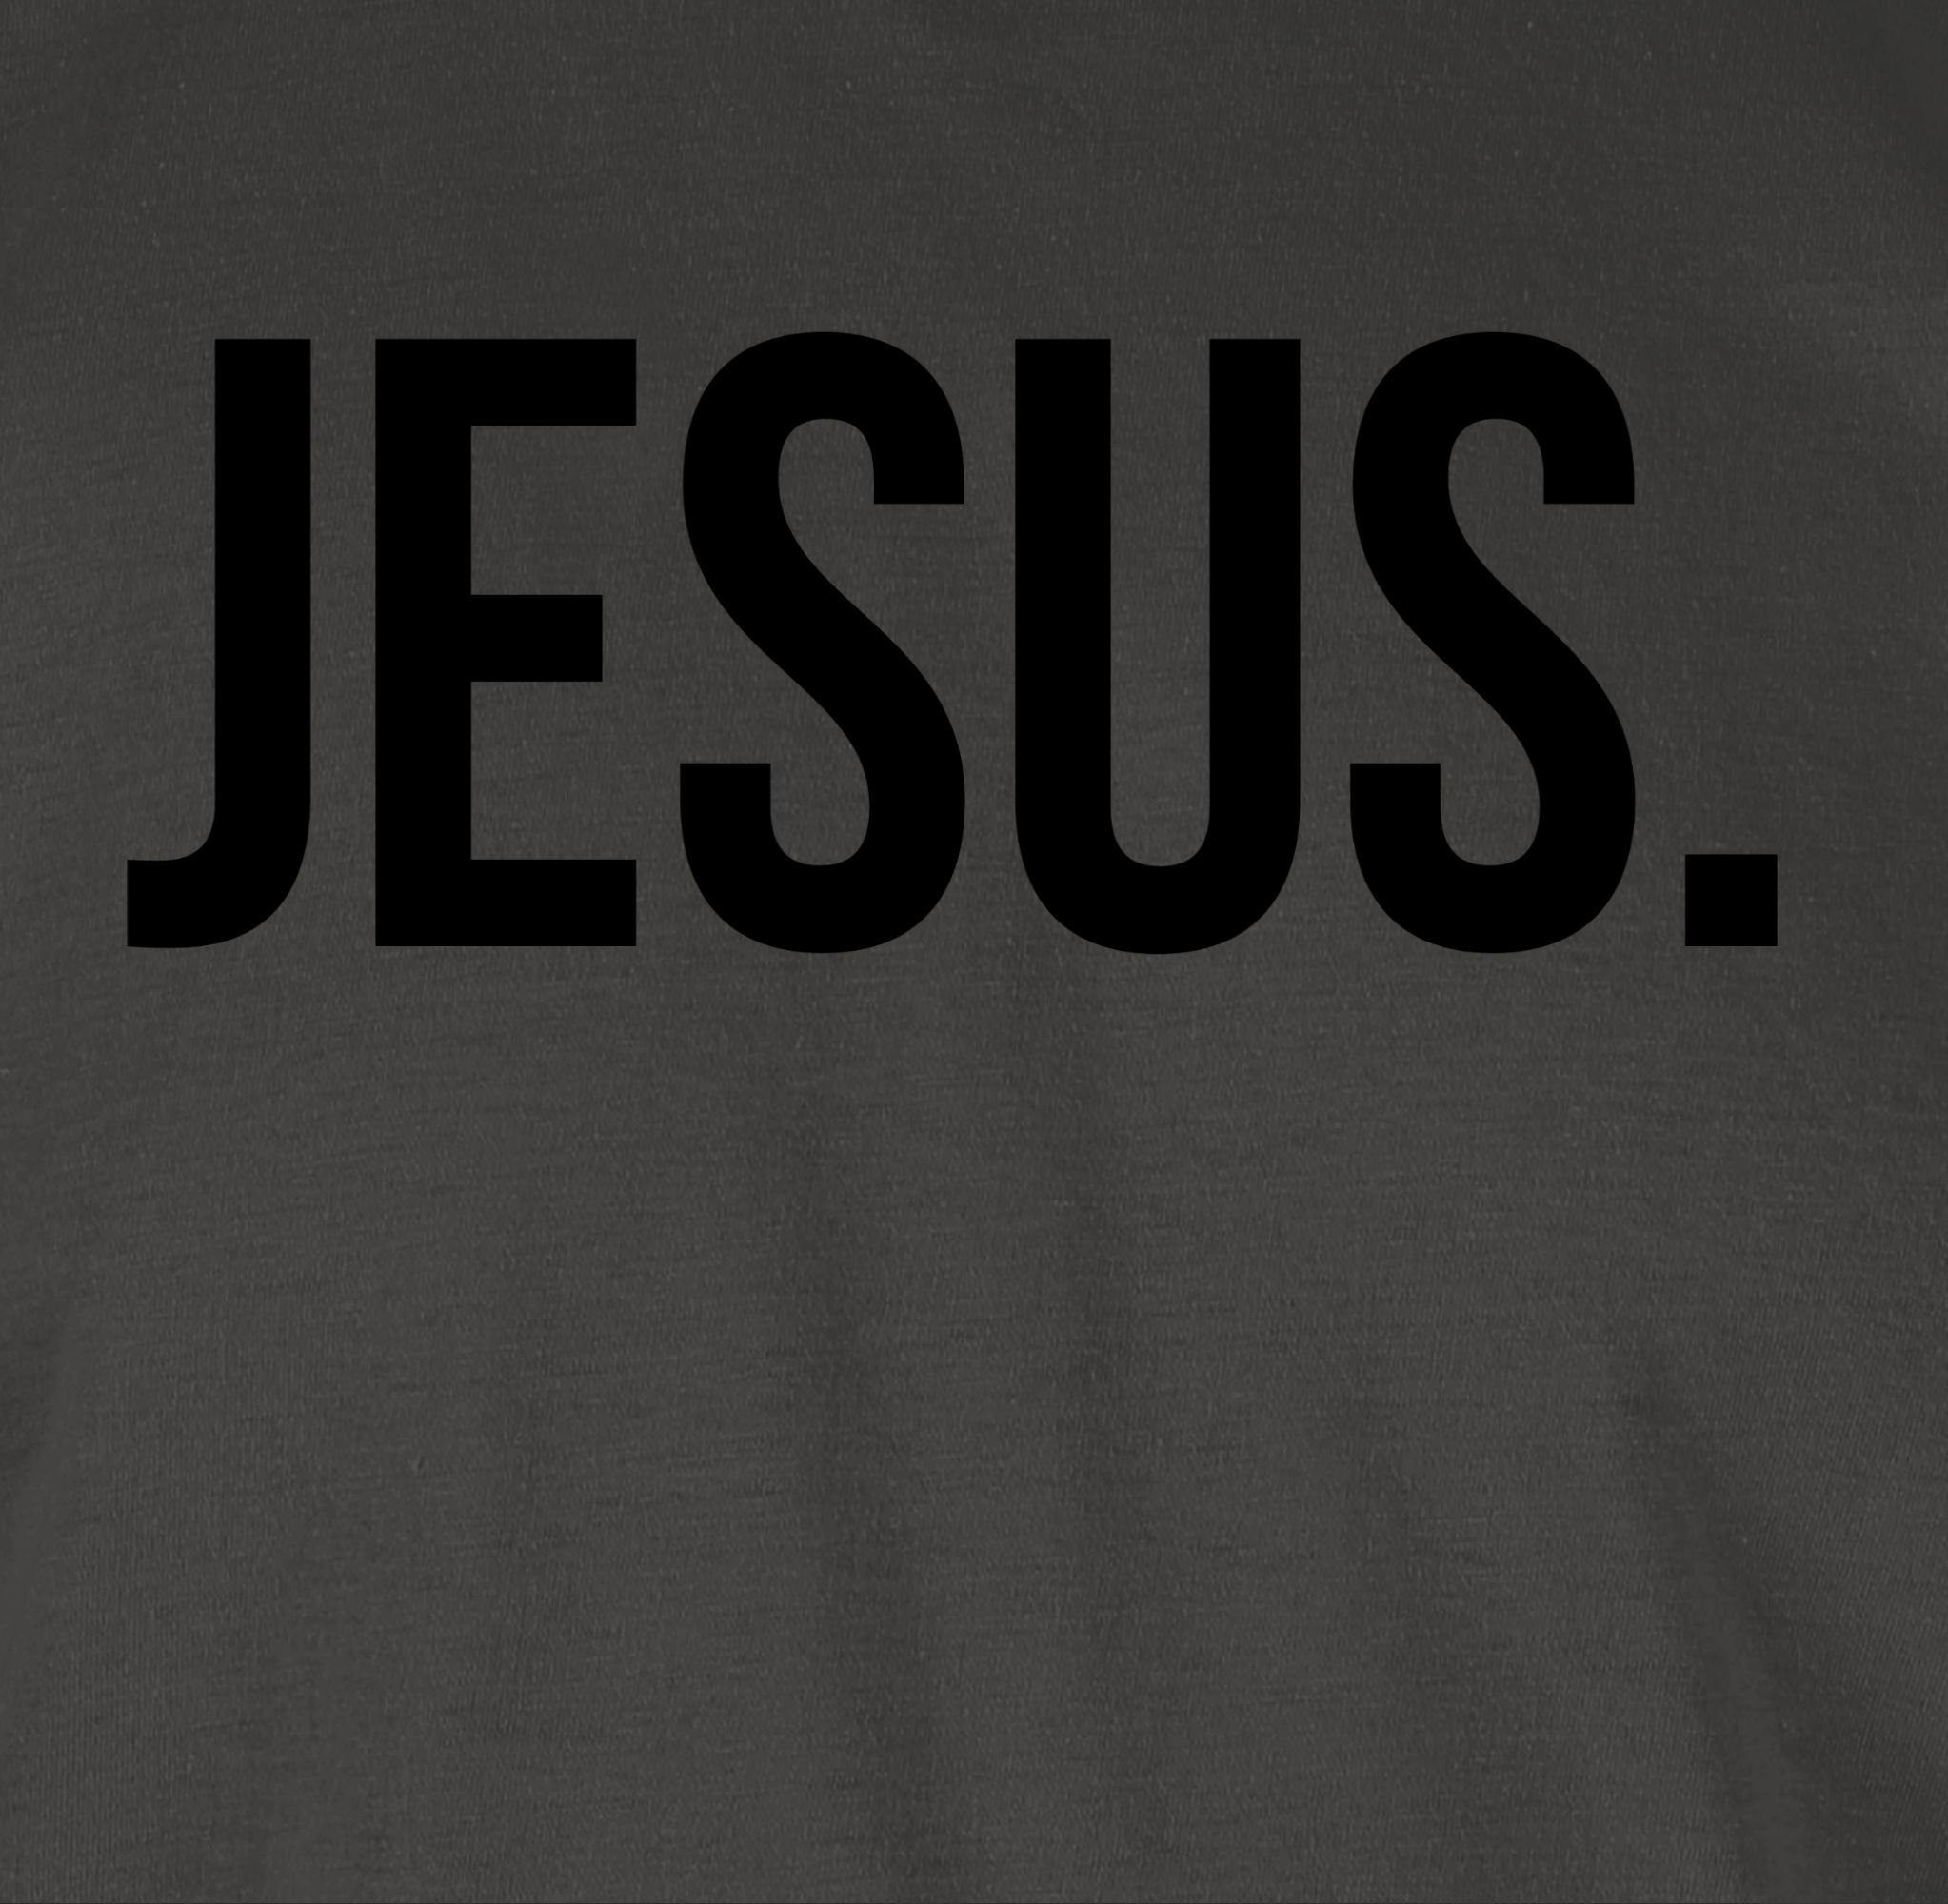 Shirtracer Dunkelgrau Christus Glaube Statement 3 Jesus T-Shirt Religion